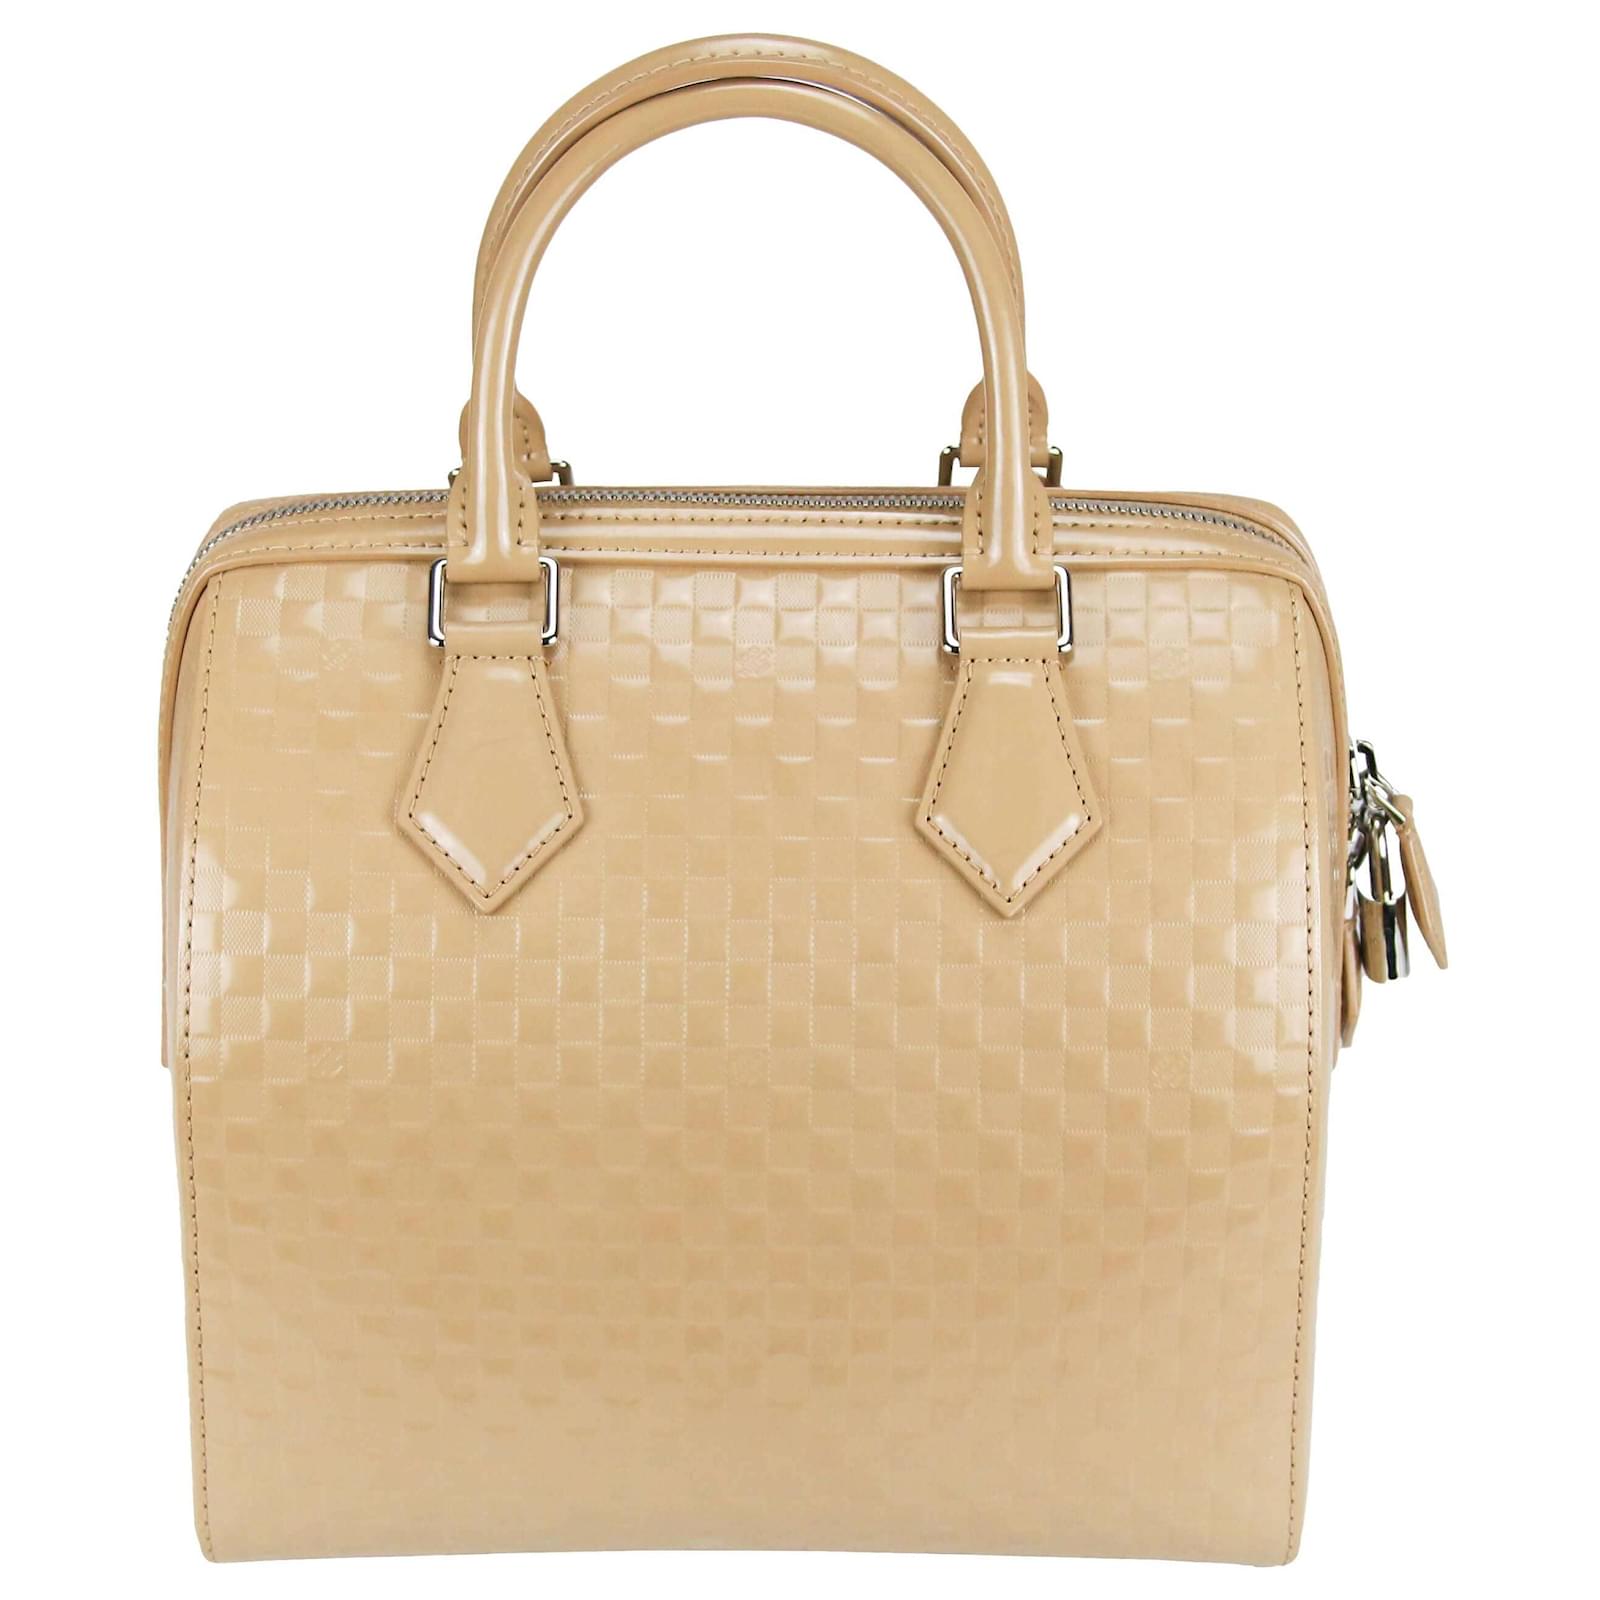 Louis Vuitton, Bags, Louis Vuitton Limited Edition Speedy Cube